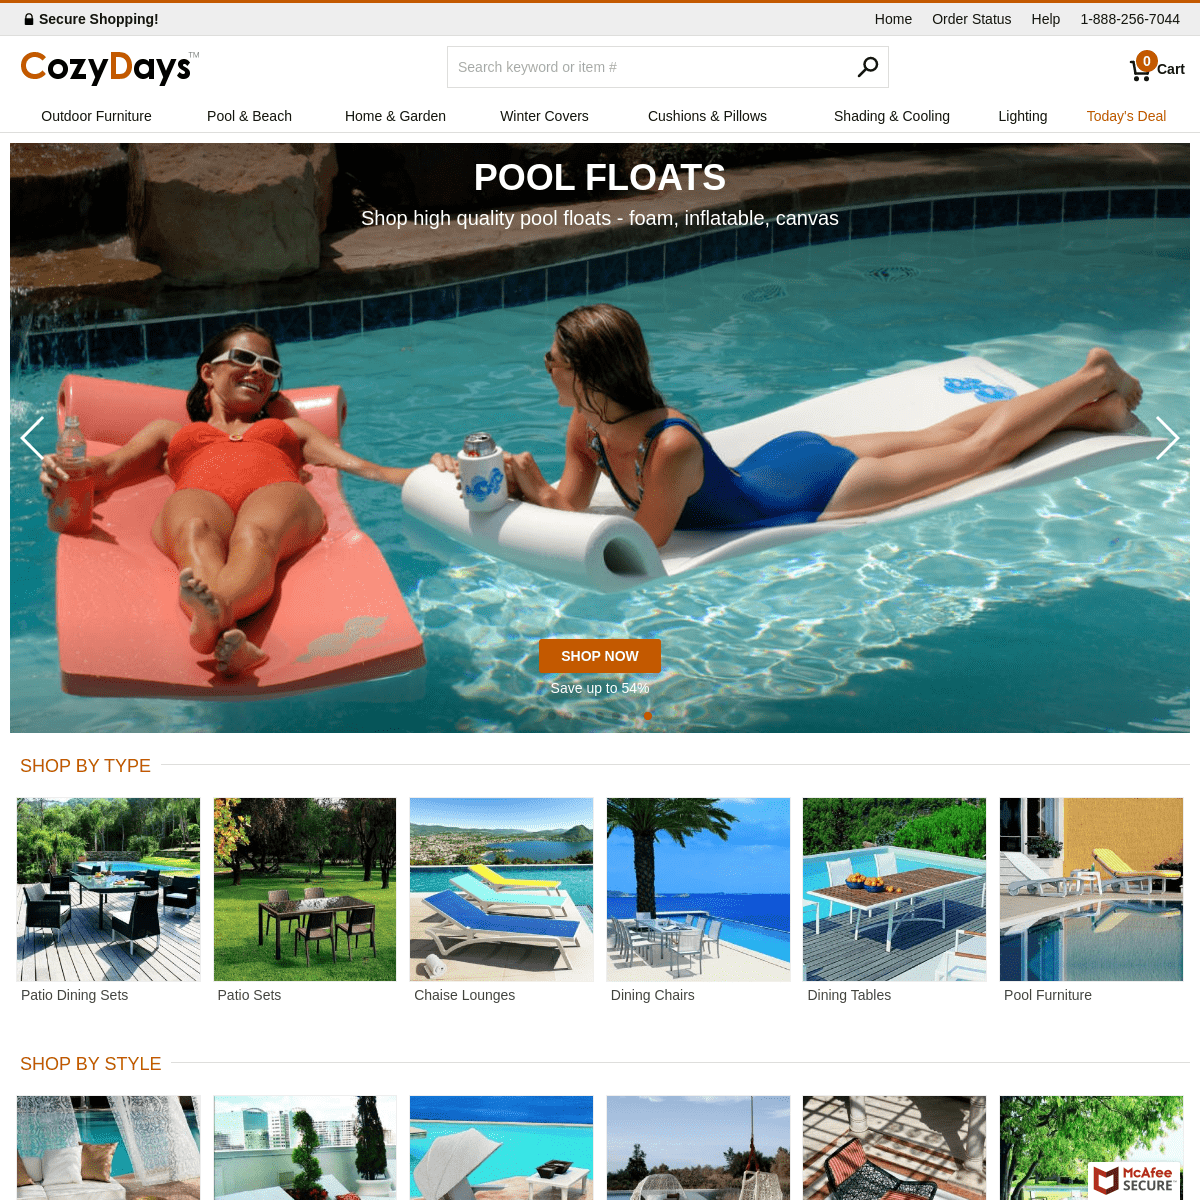 CozyDays.com - Online Patio Furniture Store for Outdoor Living